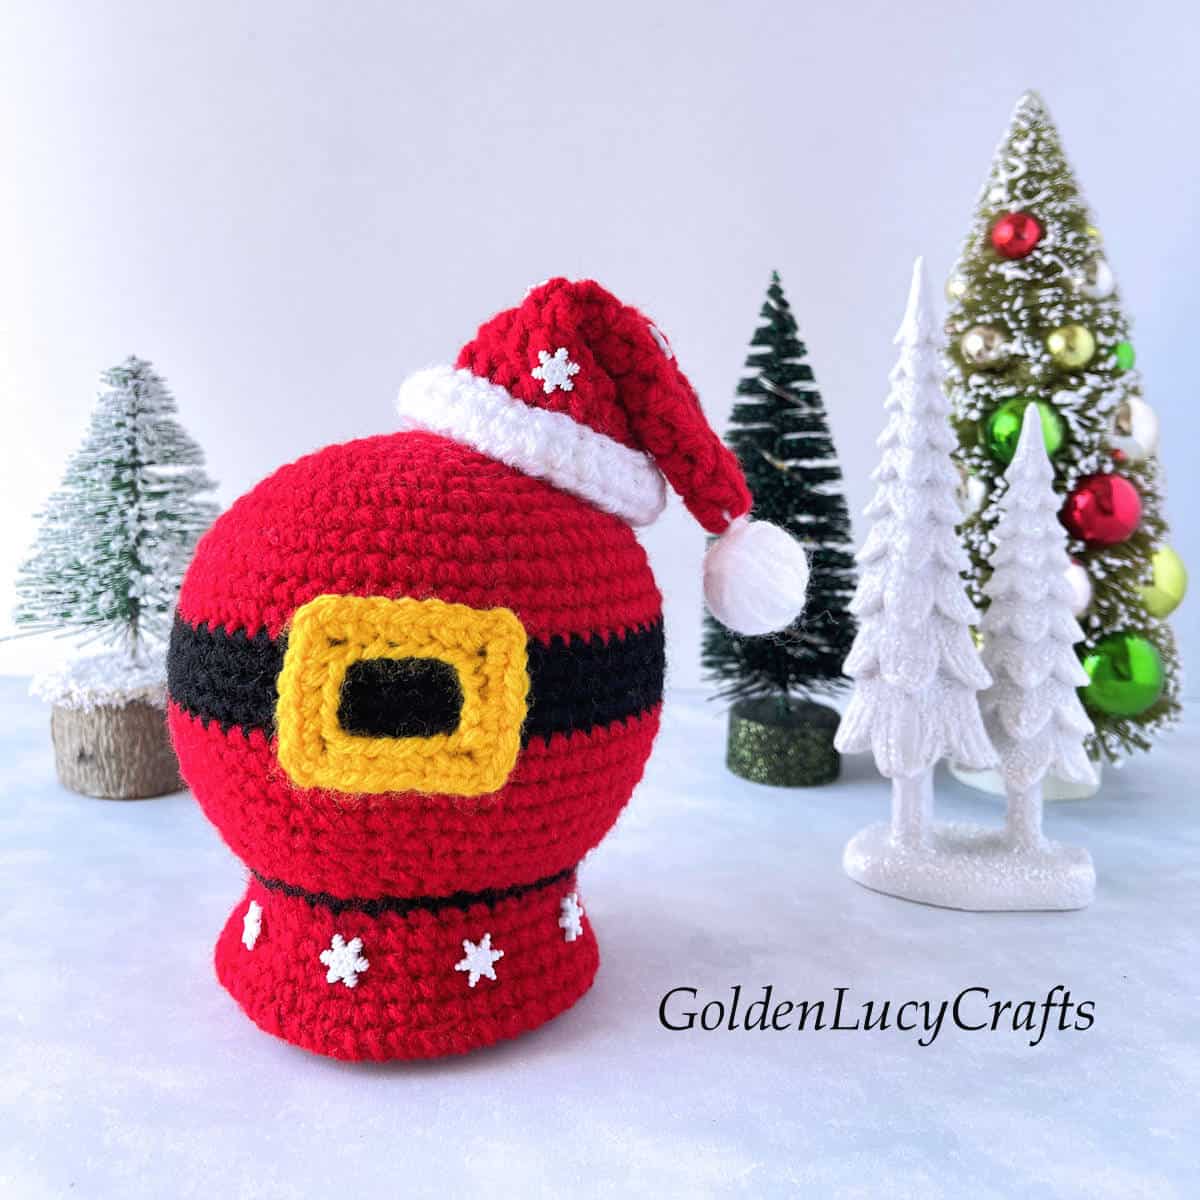 Crochet Christmas decor - Santa belly snow globe.